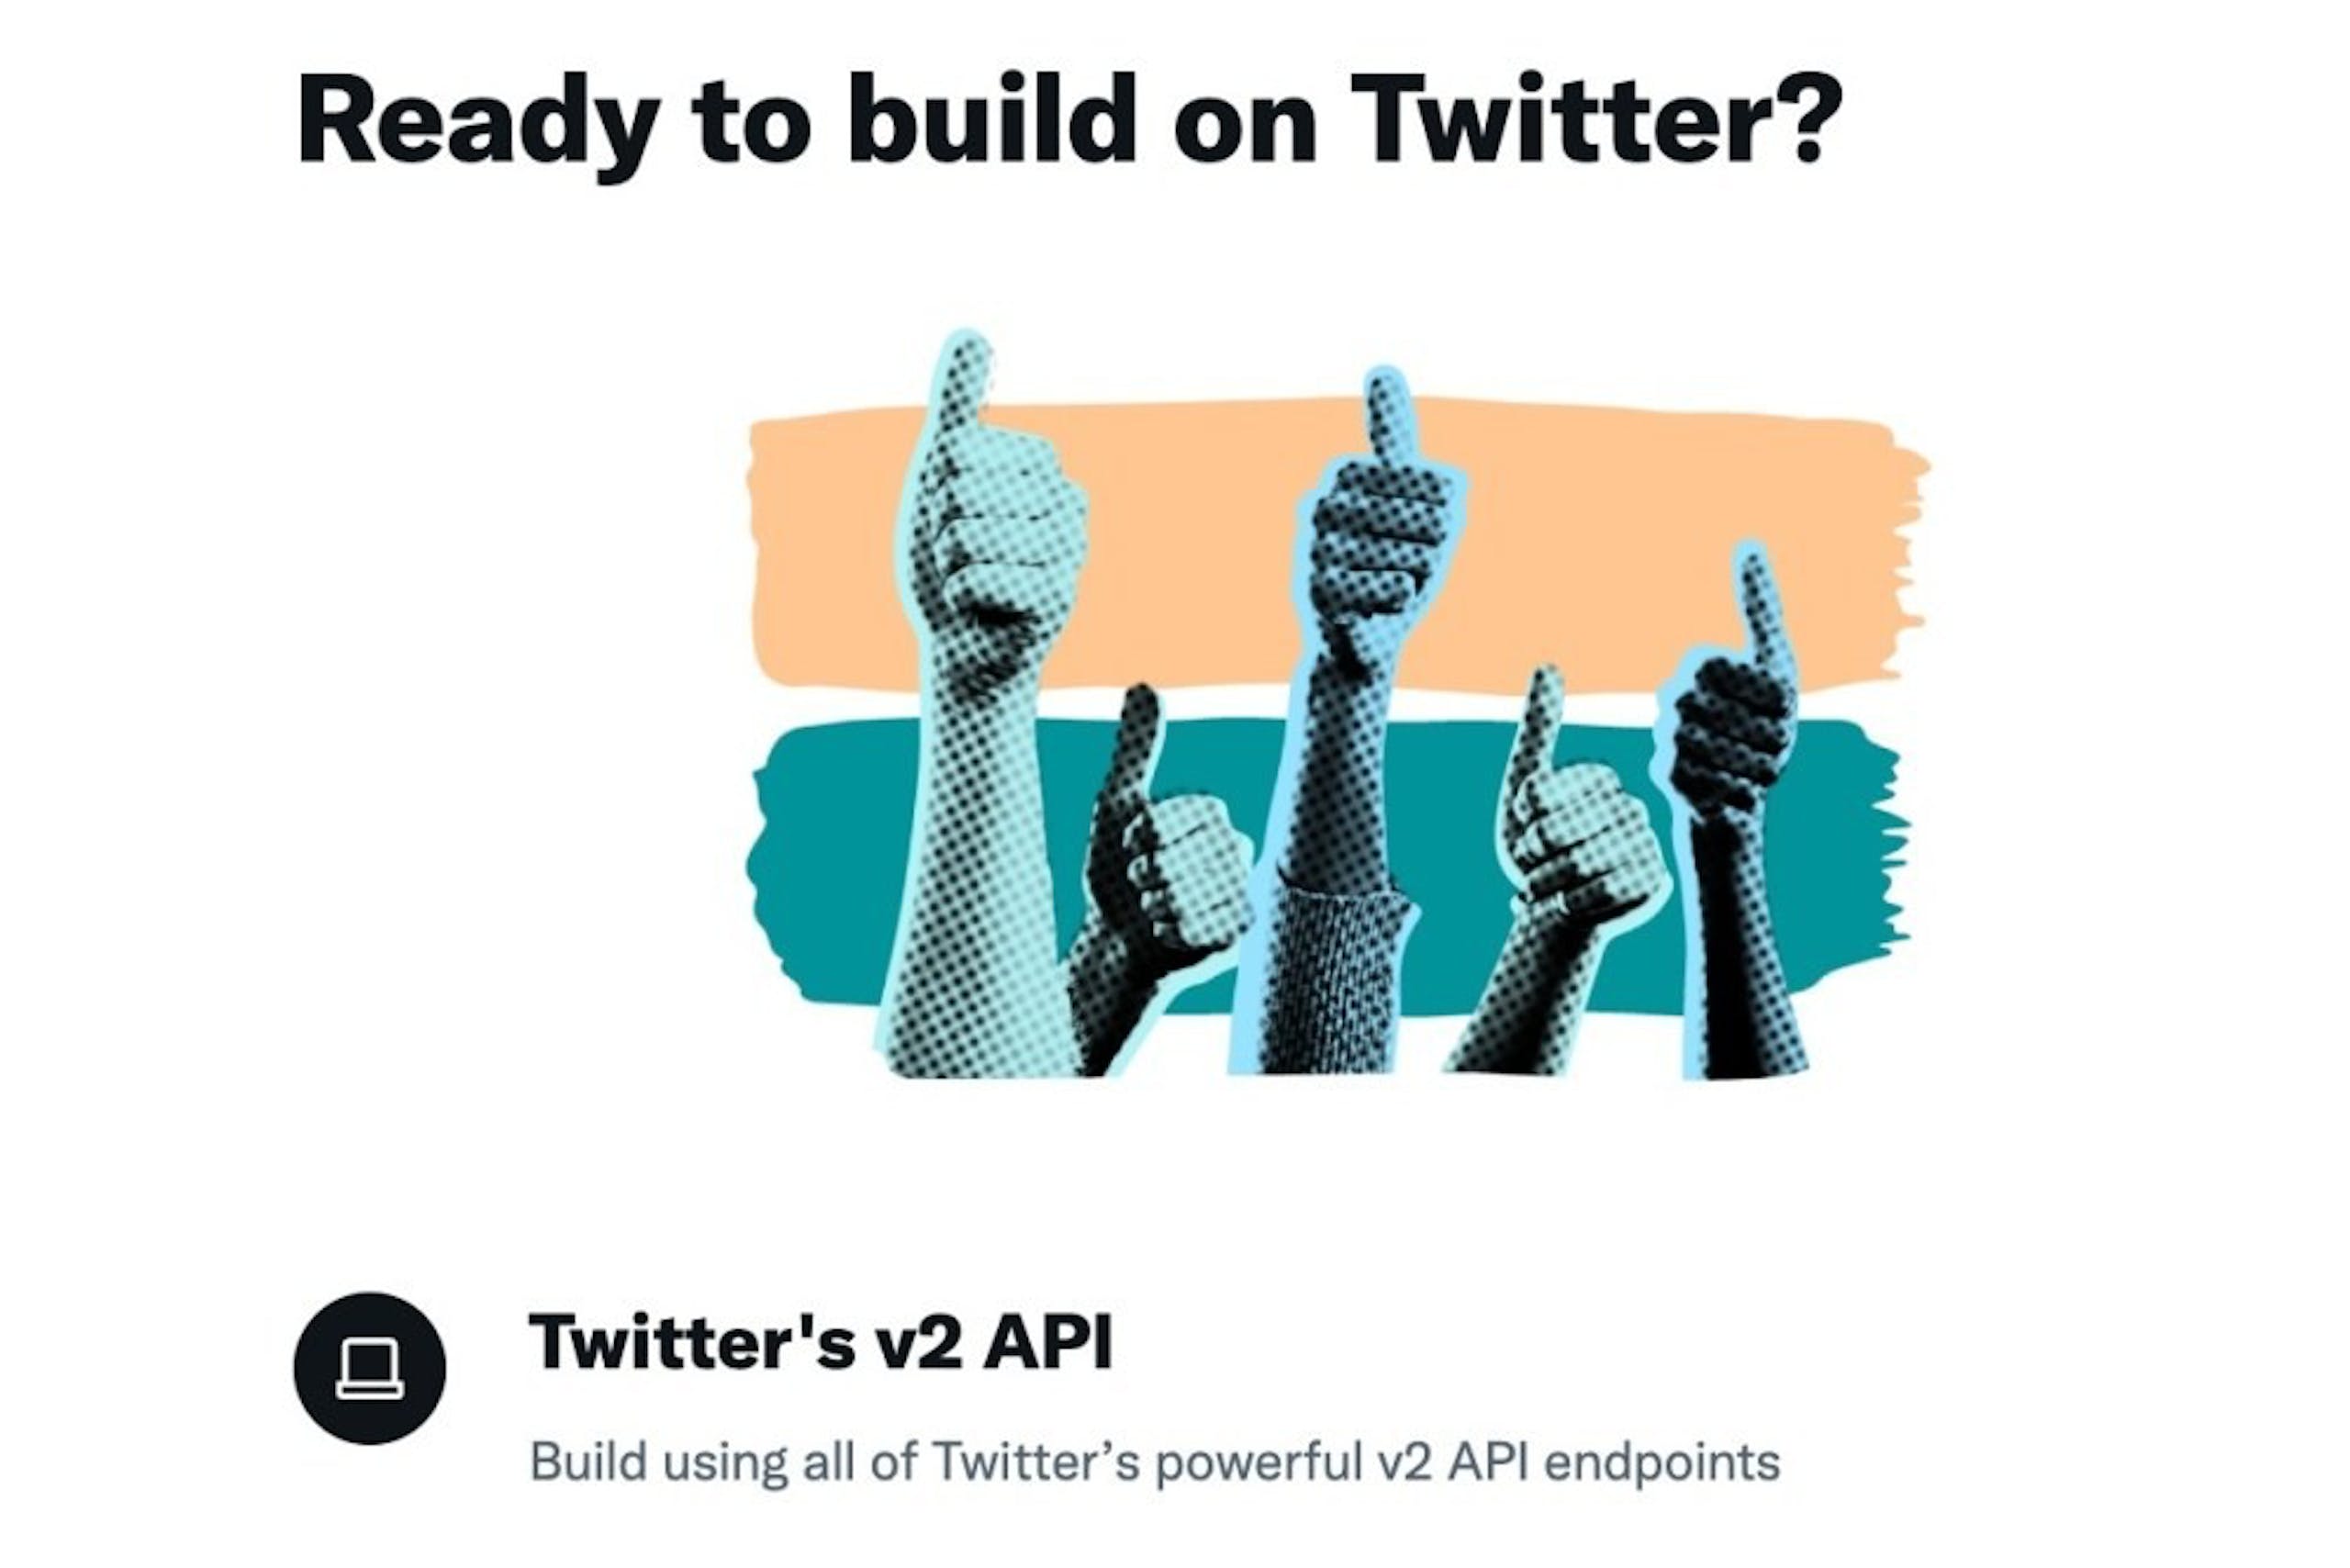 照片中提到了Ready to build on Twitter?、Twitter's v2 API、Build using all of Twitter's powerful v2 API endpoints，包含了準備在 Twitter 上構建、API、微軟 Power 自動化、微軟公司、計算機應用